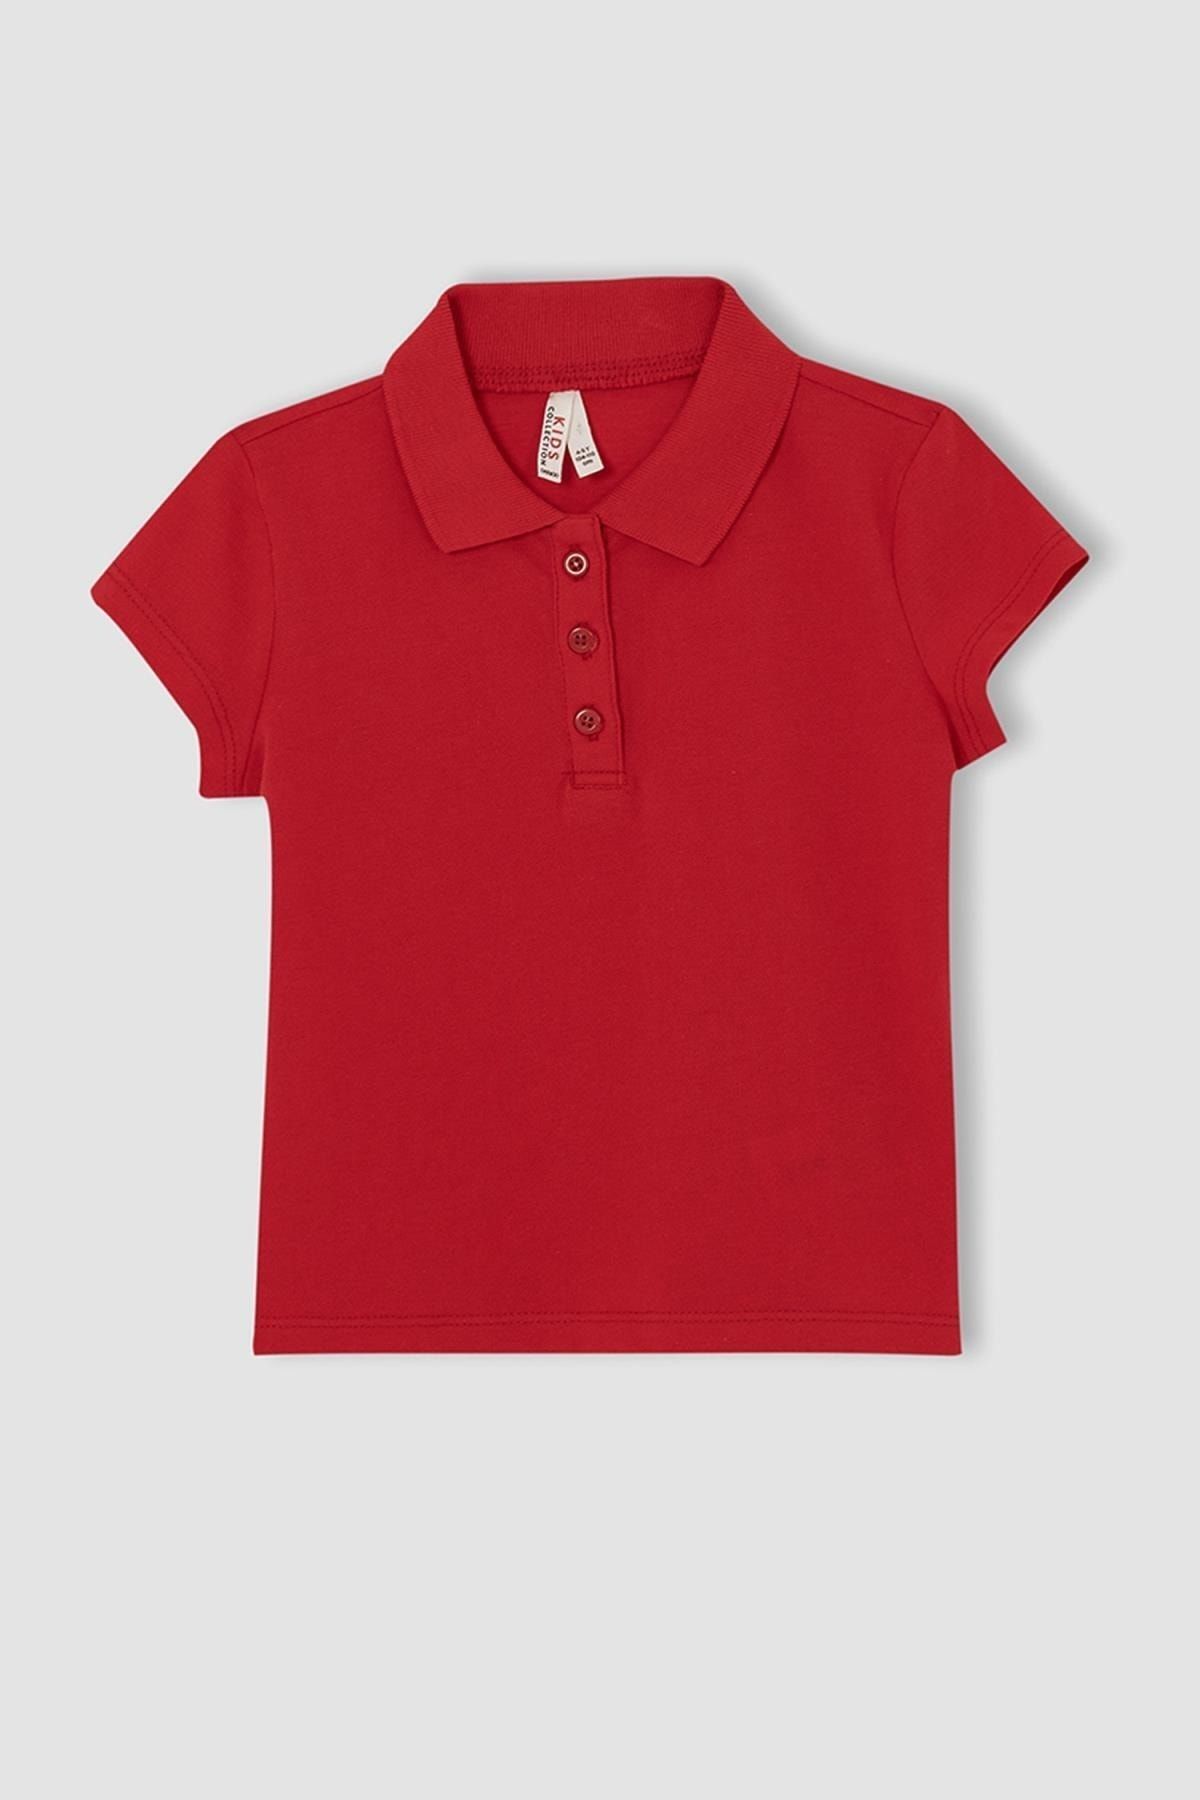 Defacto Kız Çocuk Pamuklu Kısa Kollu Polo Tişört